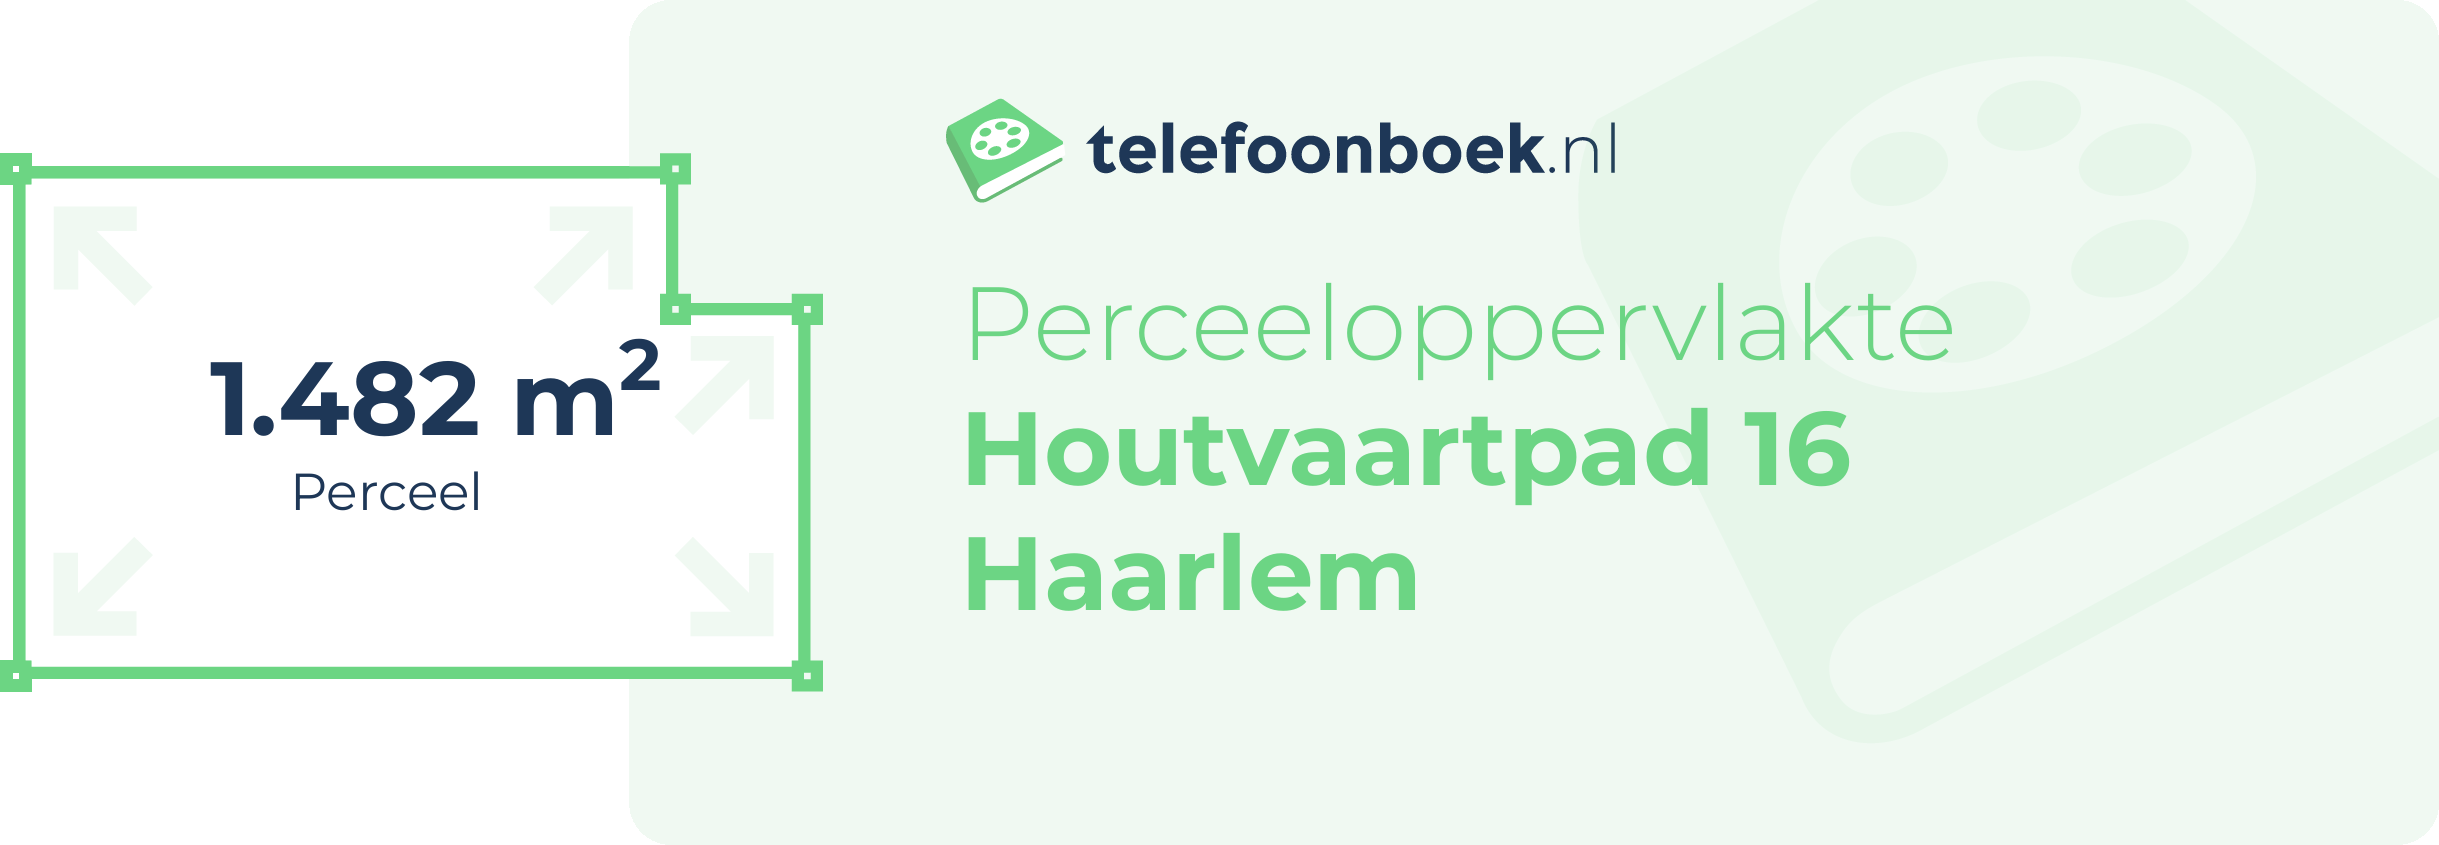 Perceeloppervlakte Houtvaartpad 16 Haarlem